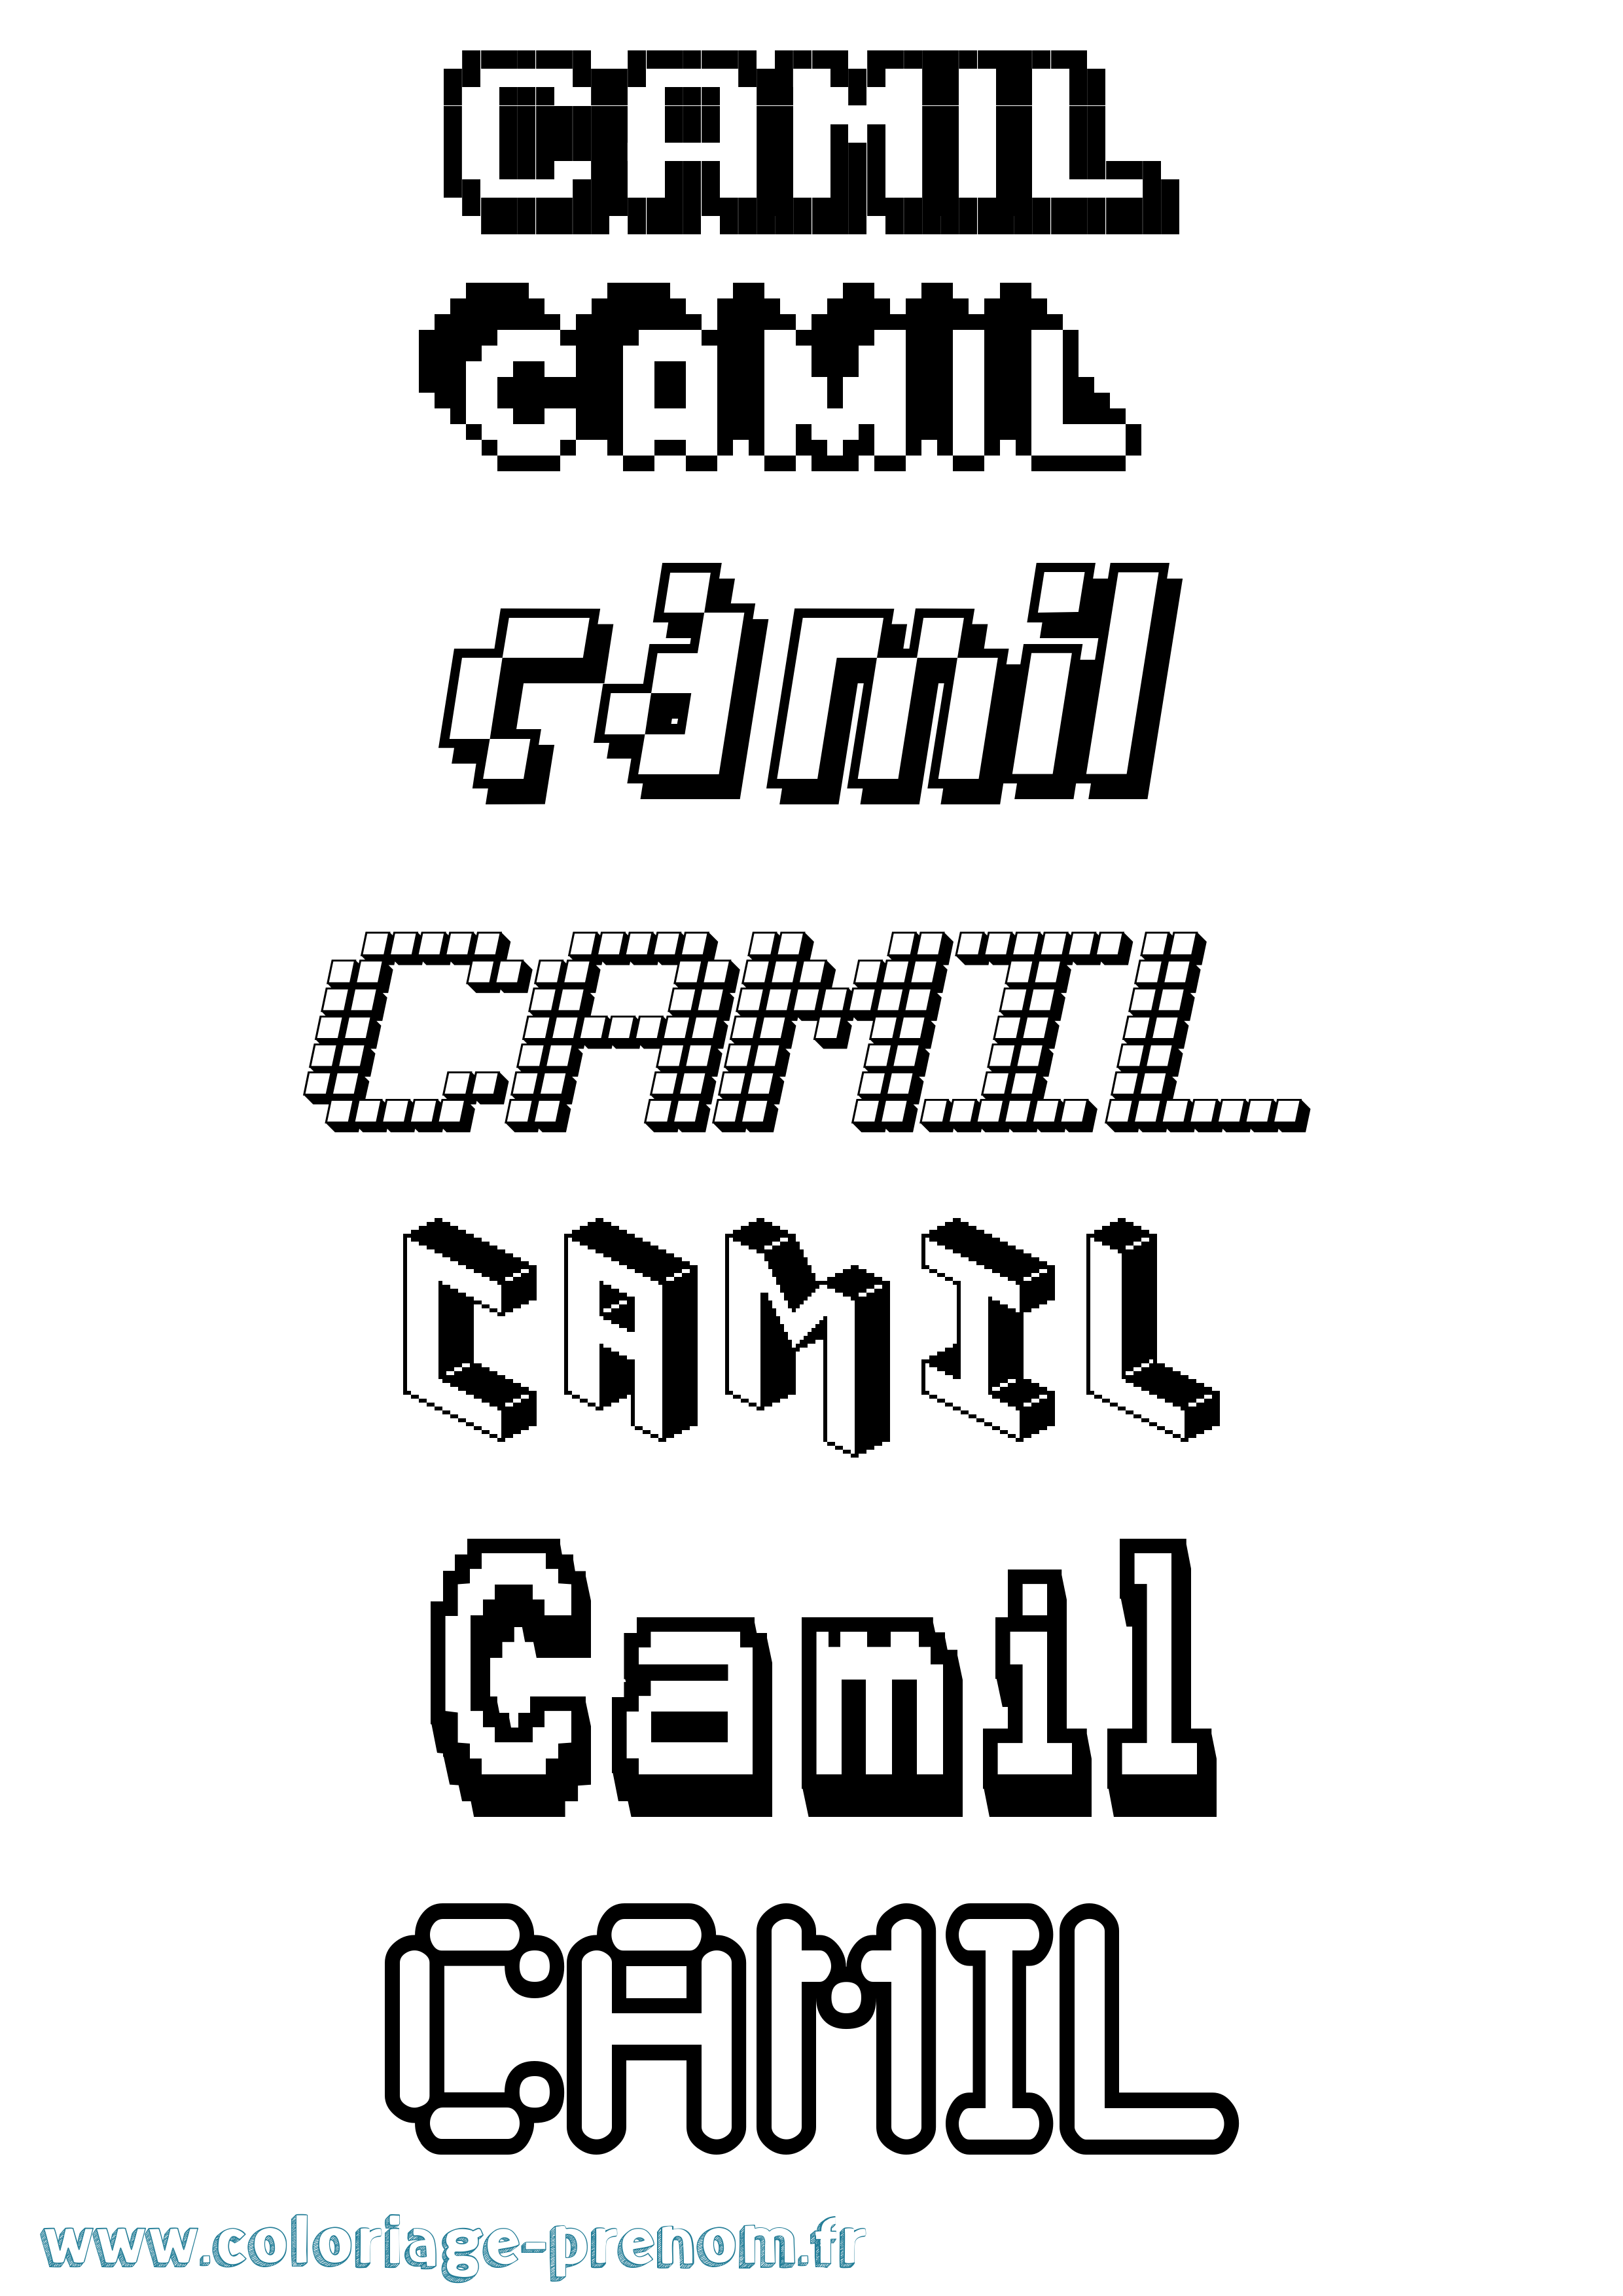 Coloriage prénom Camil Pixel